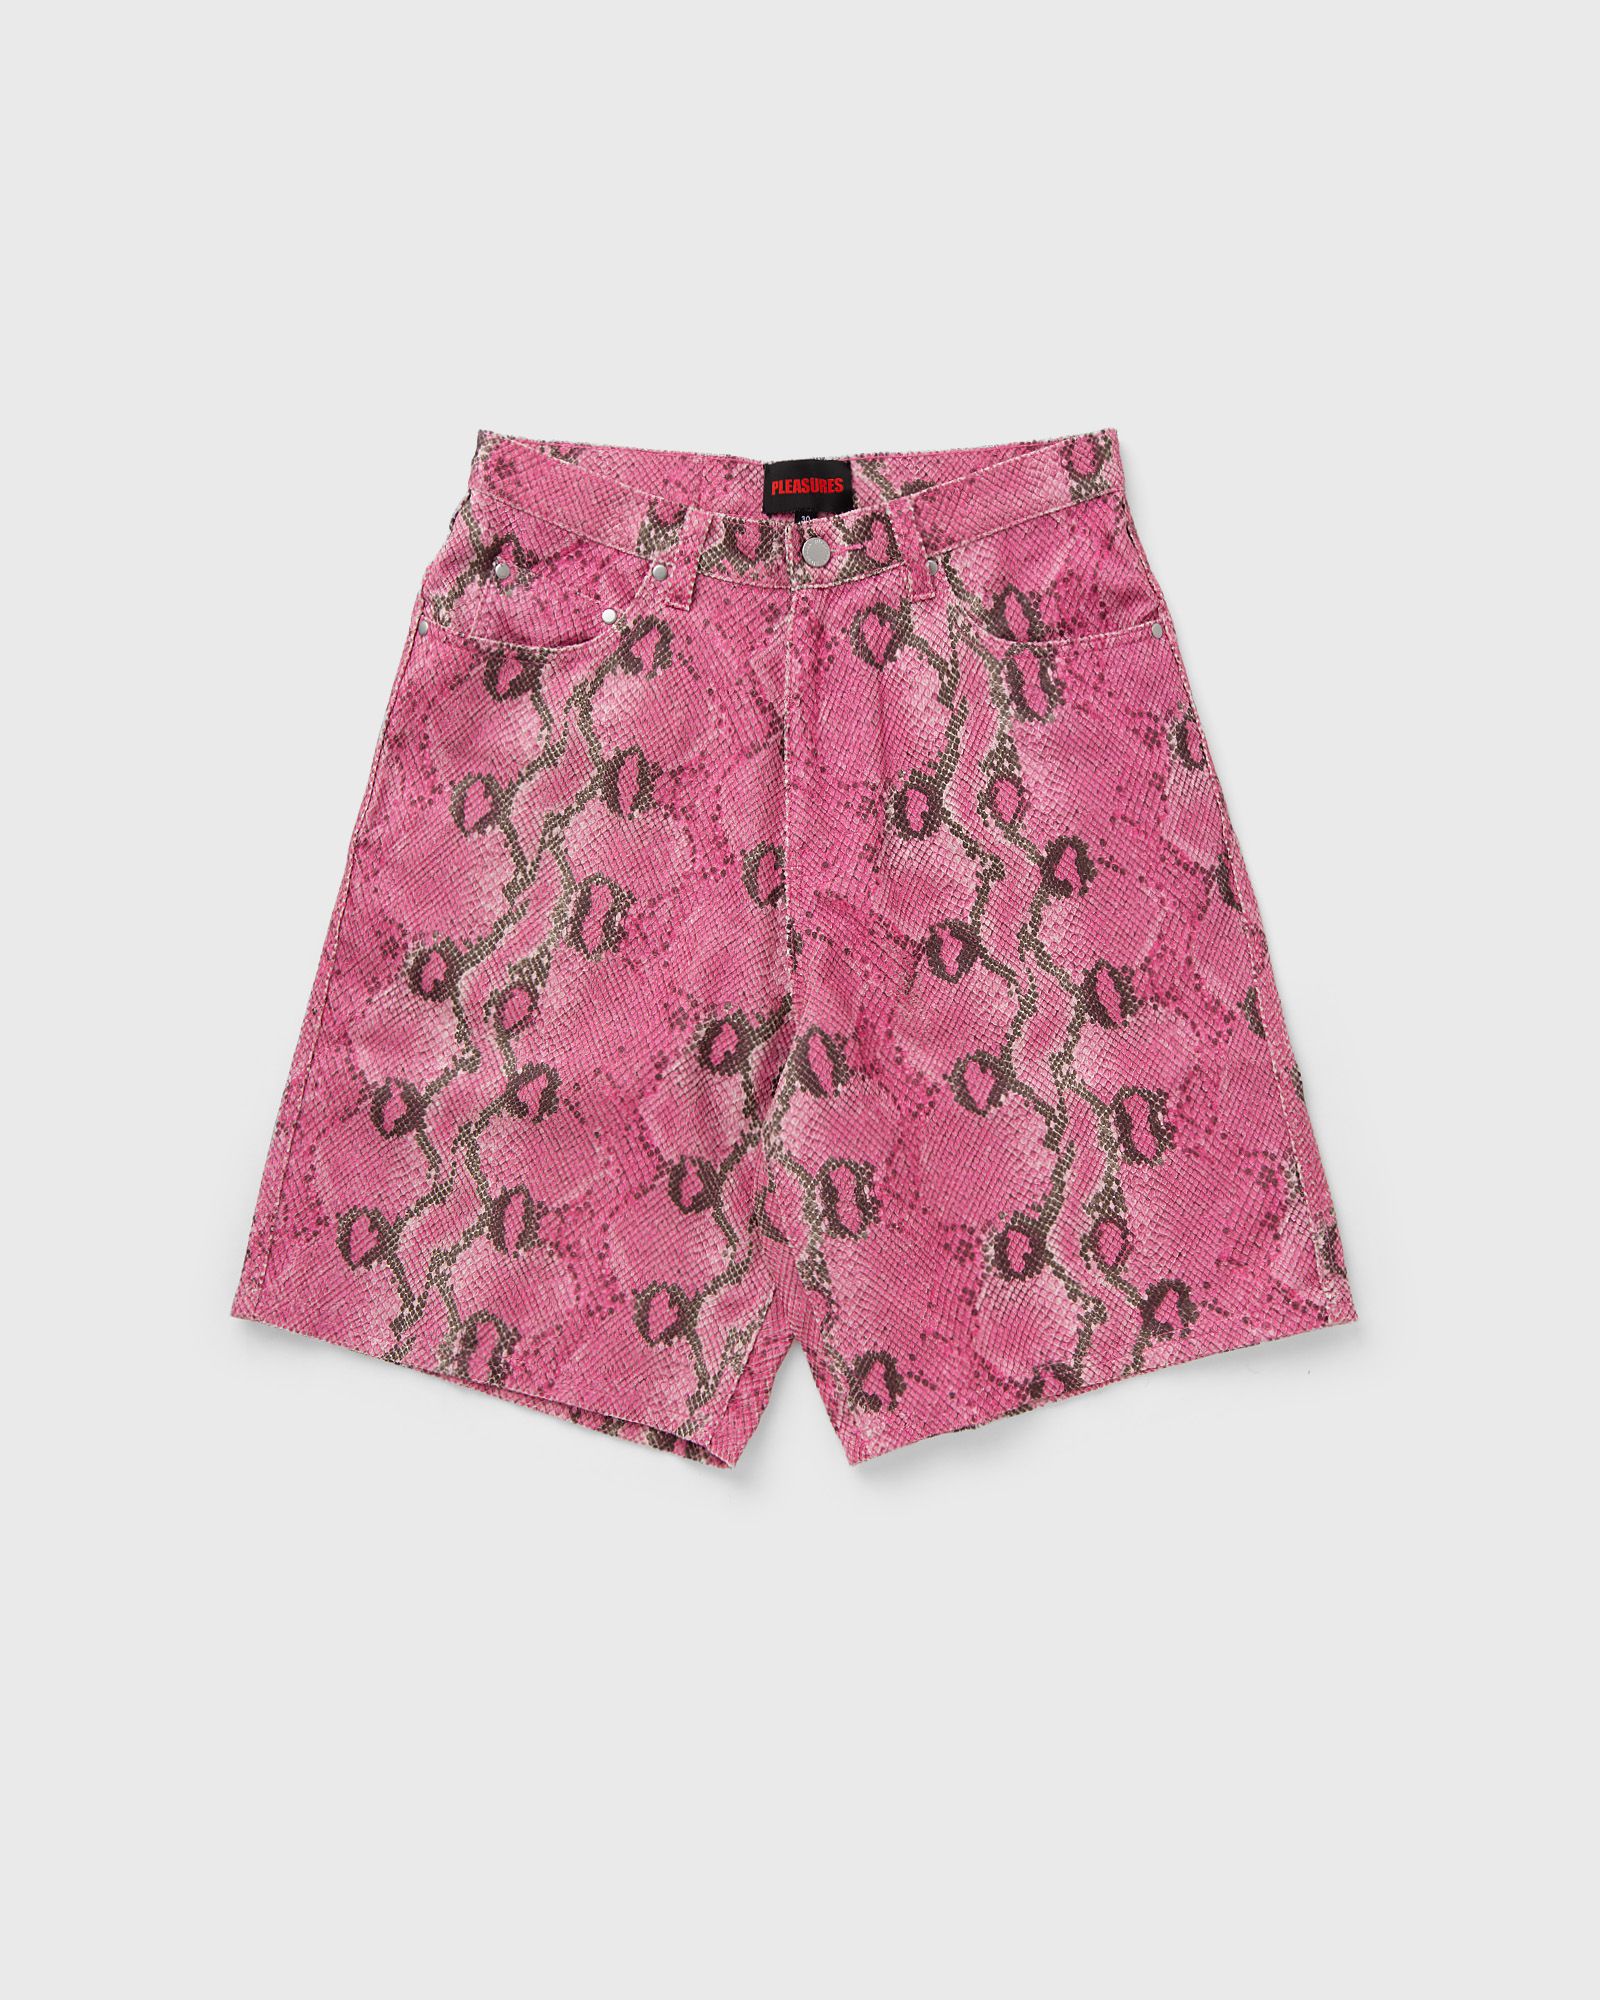 Pleasures - rattle shorts men casual shorts pink in größe:l